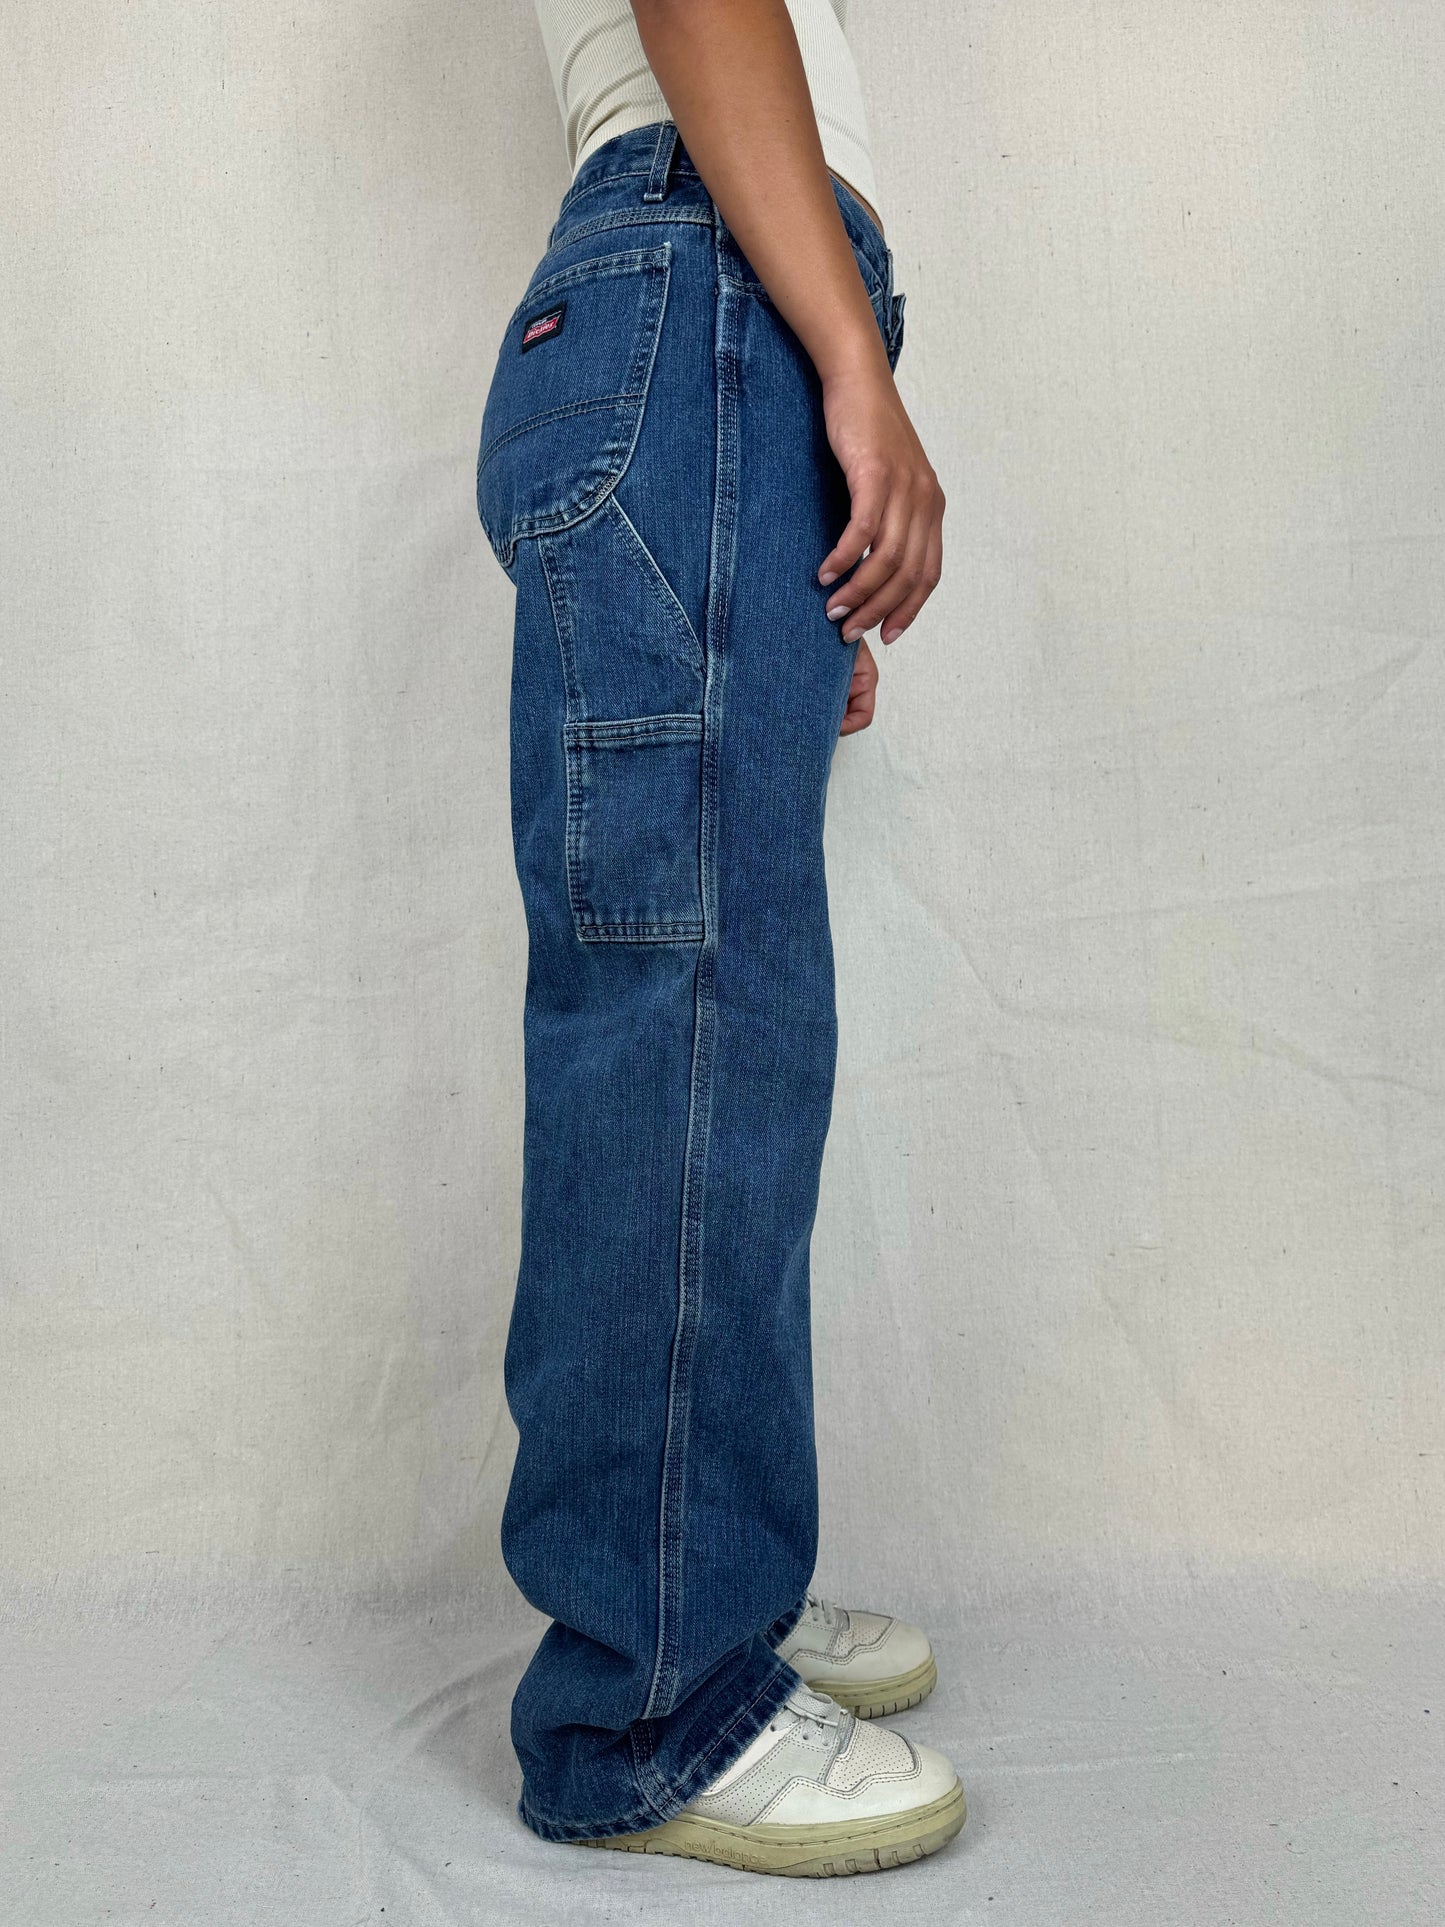 90's Dickies Vintage Carpenter Jeans Size 30x32